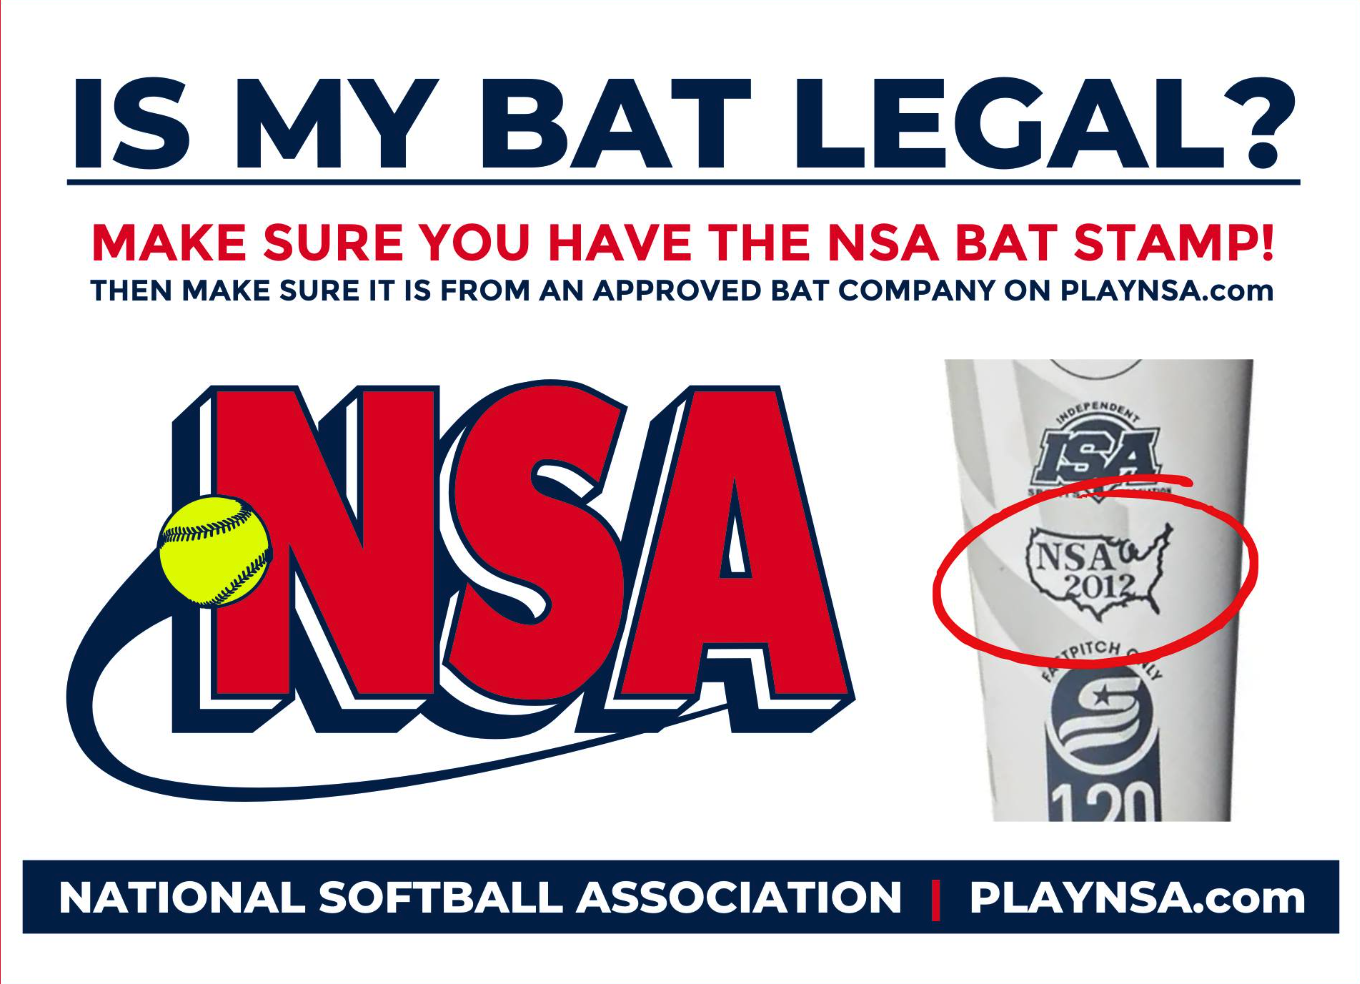 Is my bat legal